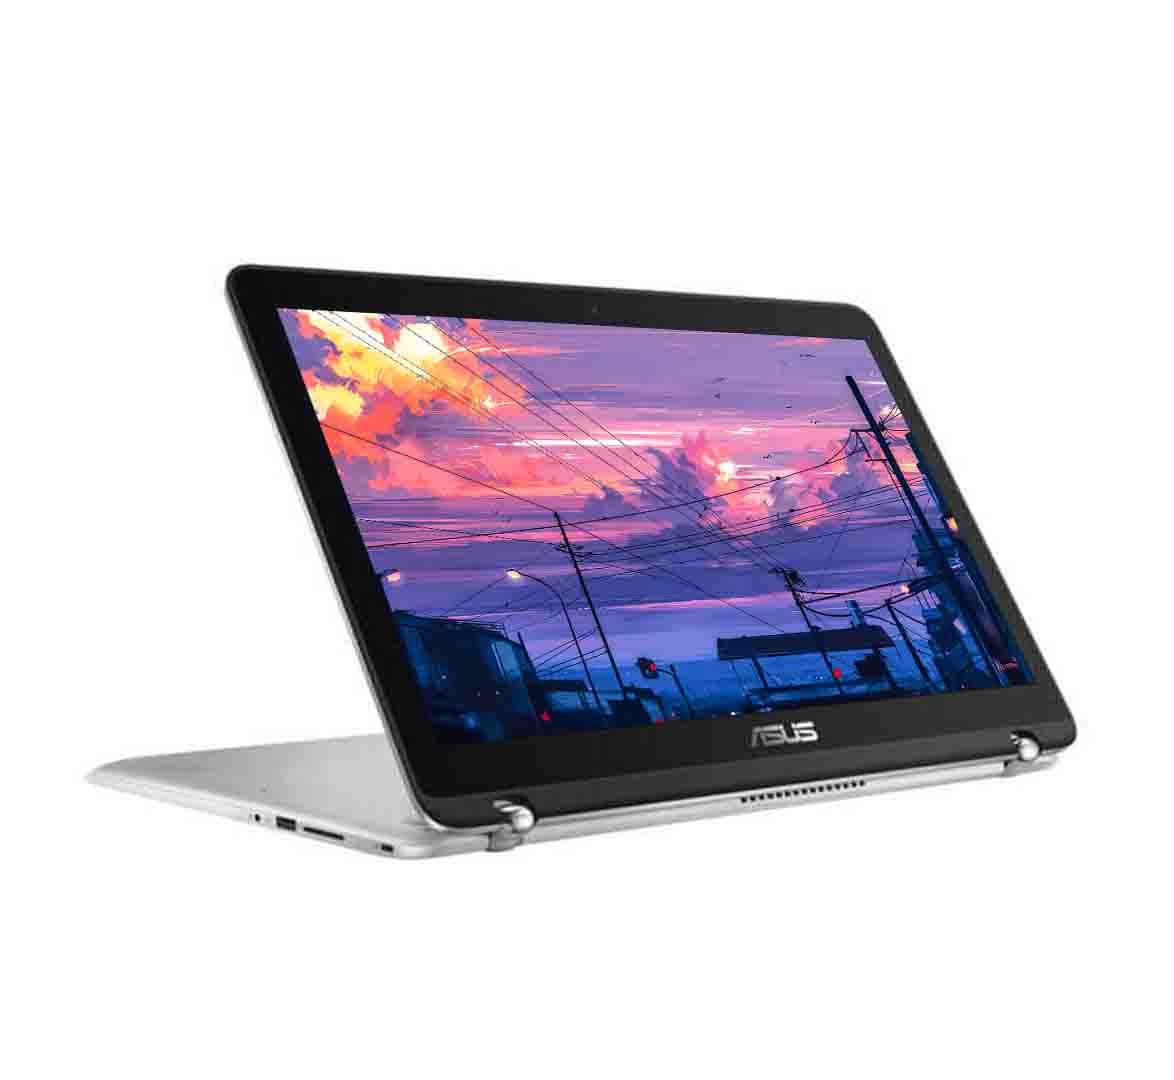 Asus Q504U Business Laptop, Intel Core i5-6th Generation CPU, 8GB RAM, 256GB SSD, 15.4 inch Touchscreen 360°, Windows 10 Pro, Refurbished Laptop